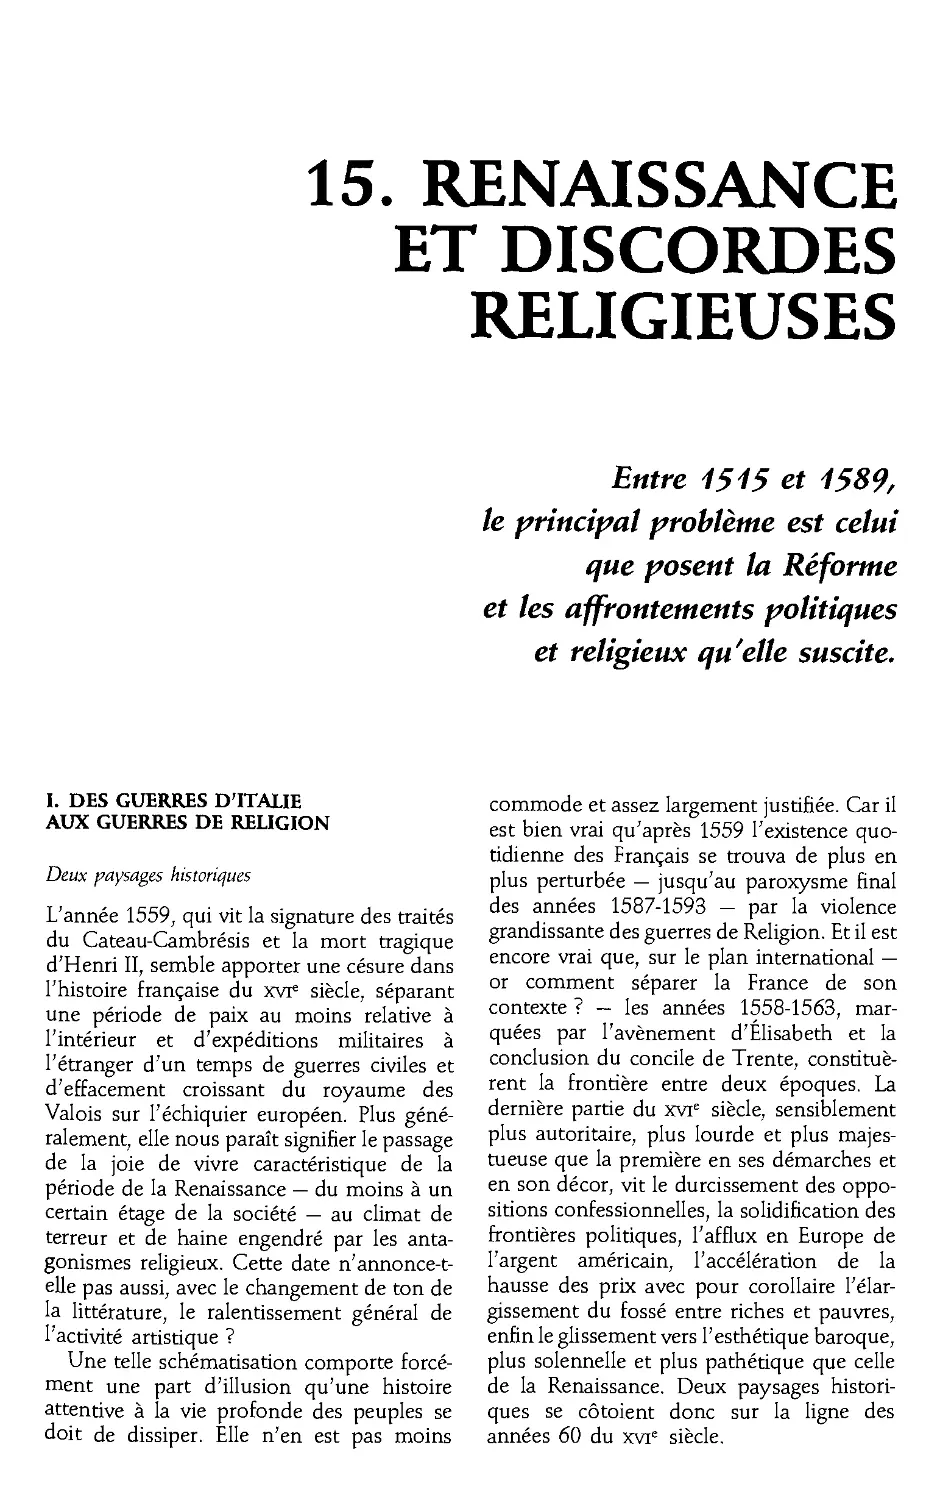 15. Renaissance et discordes religieuses, 1515-1589 [371]